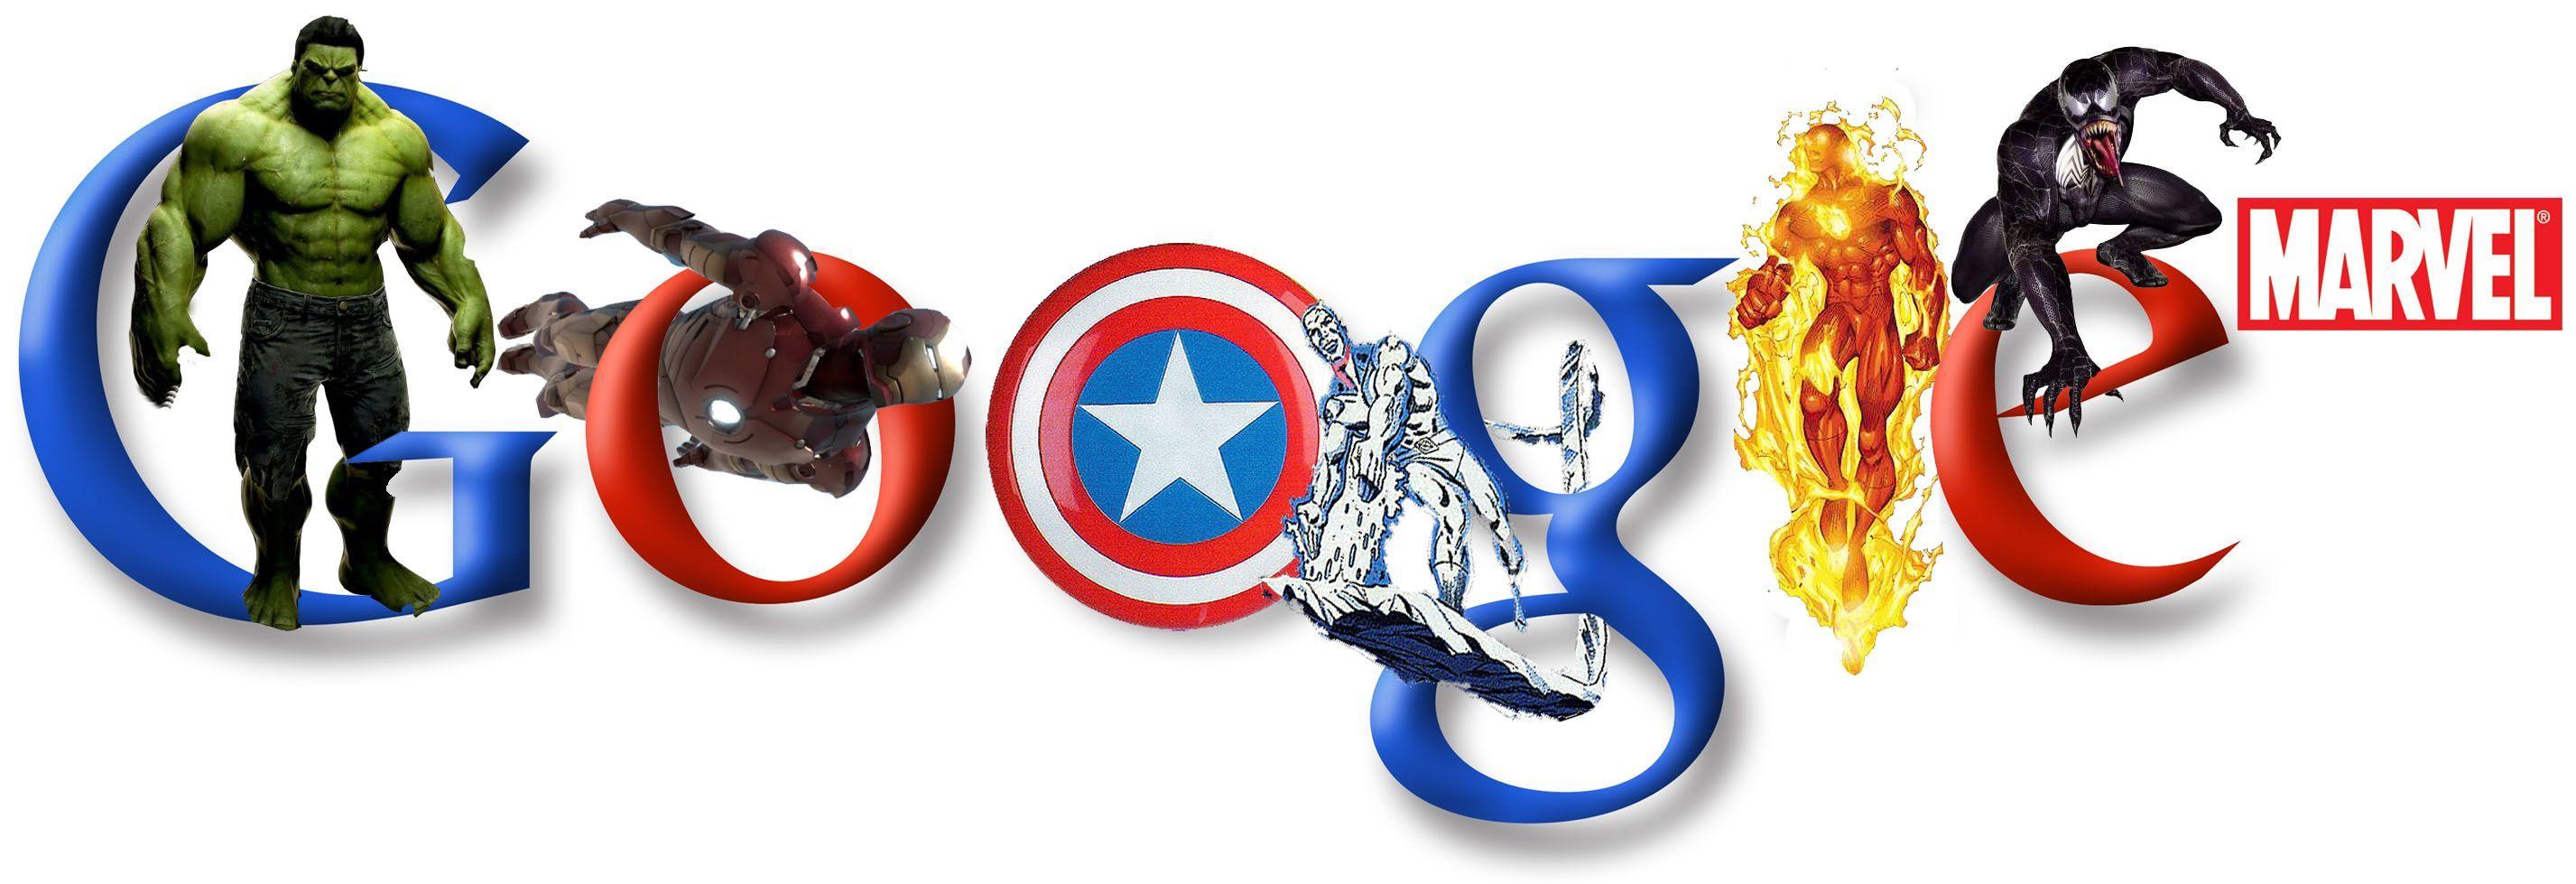 Pretty Google Logo - 40+ Outstanding Google Logos (Google Doodles) | google | Pinterest ...